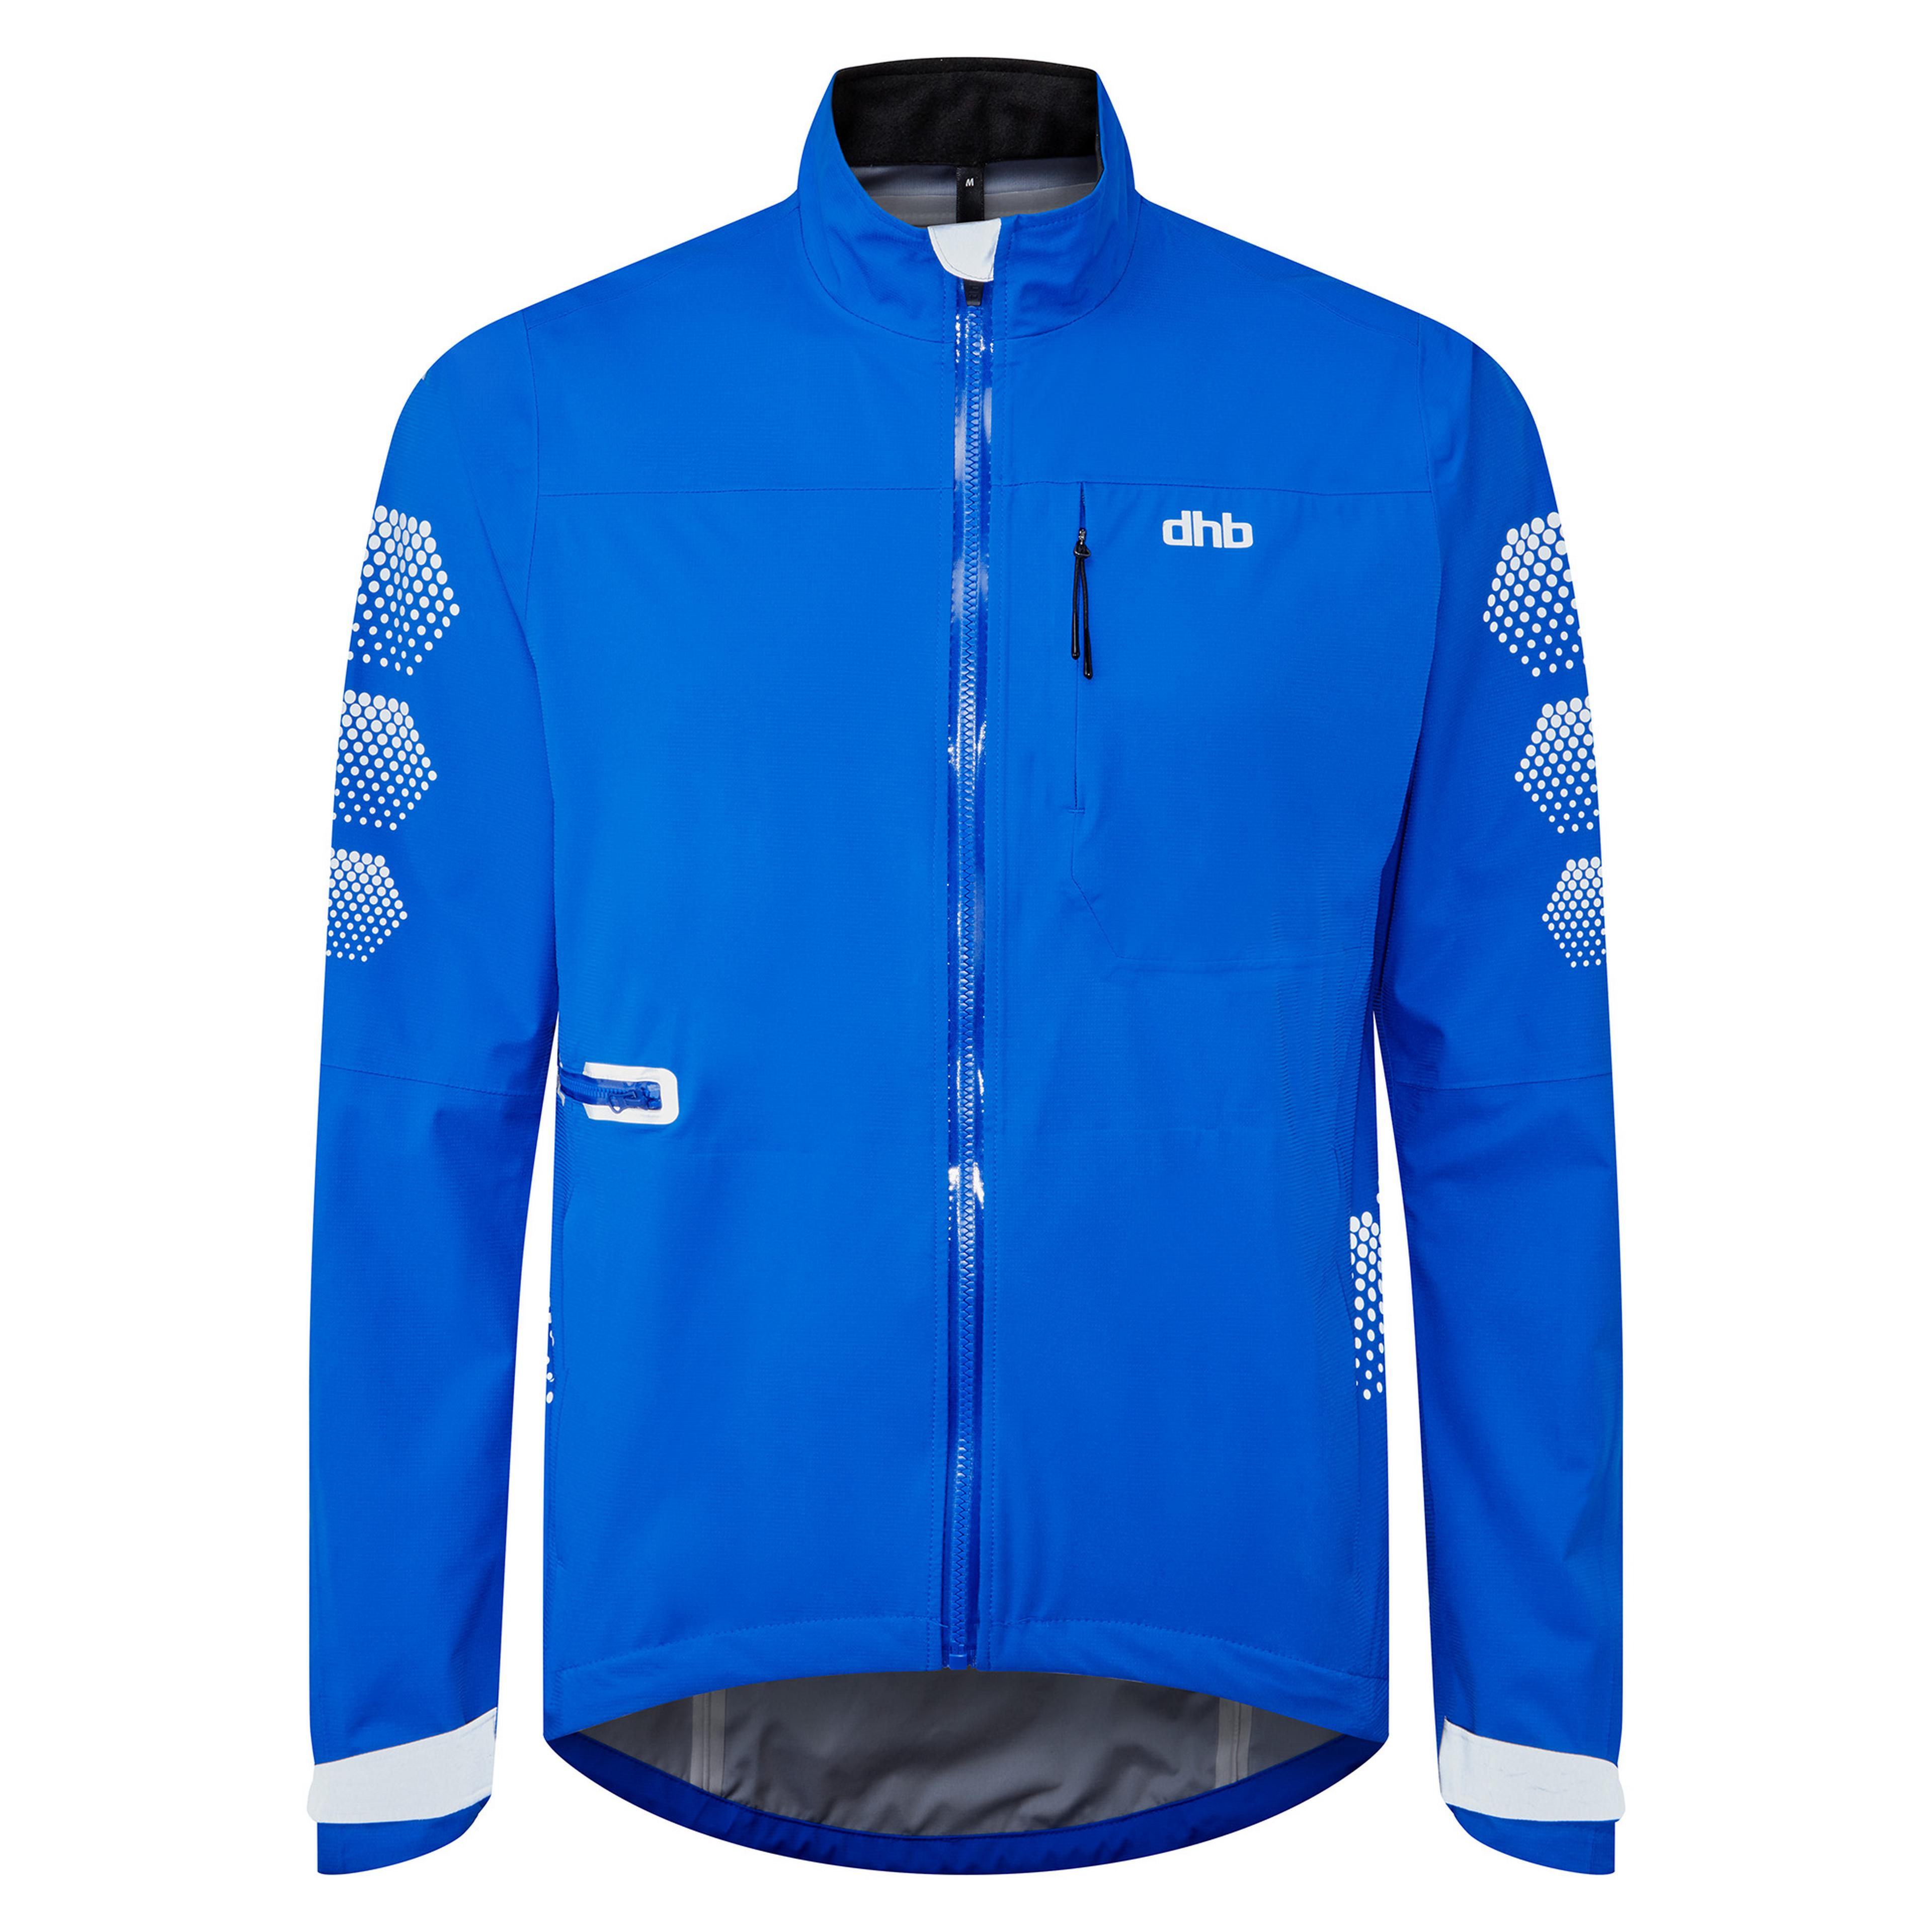 dhb FL Men’s Reflective Waterproof Jacket